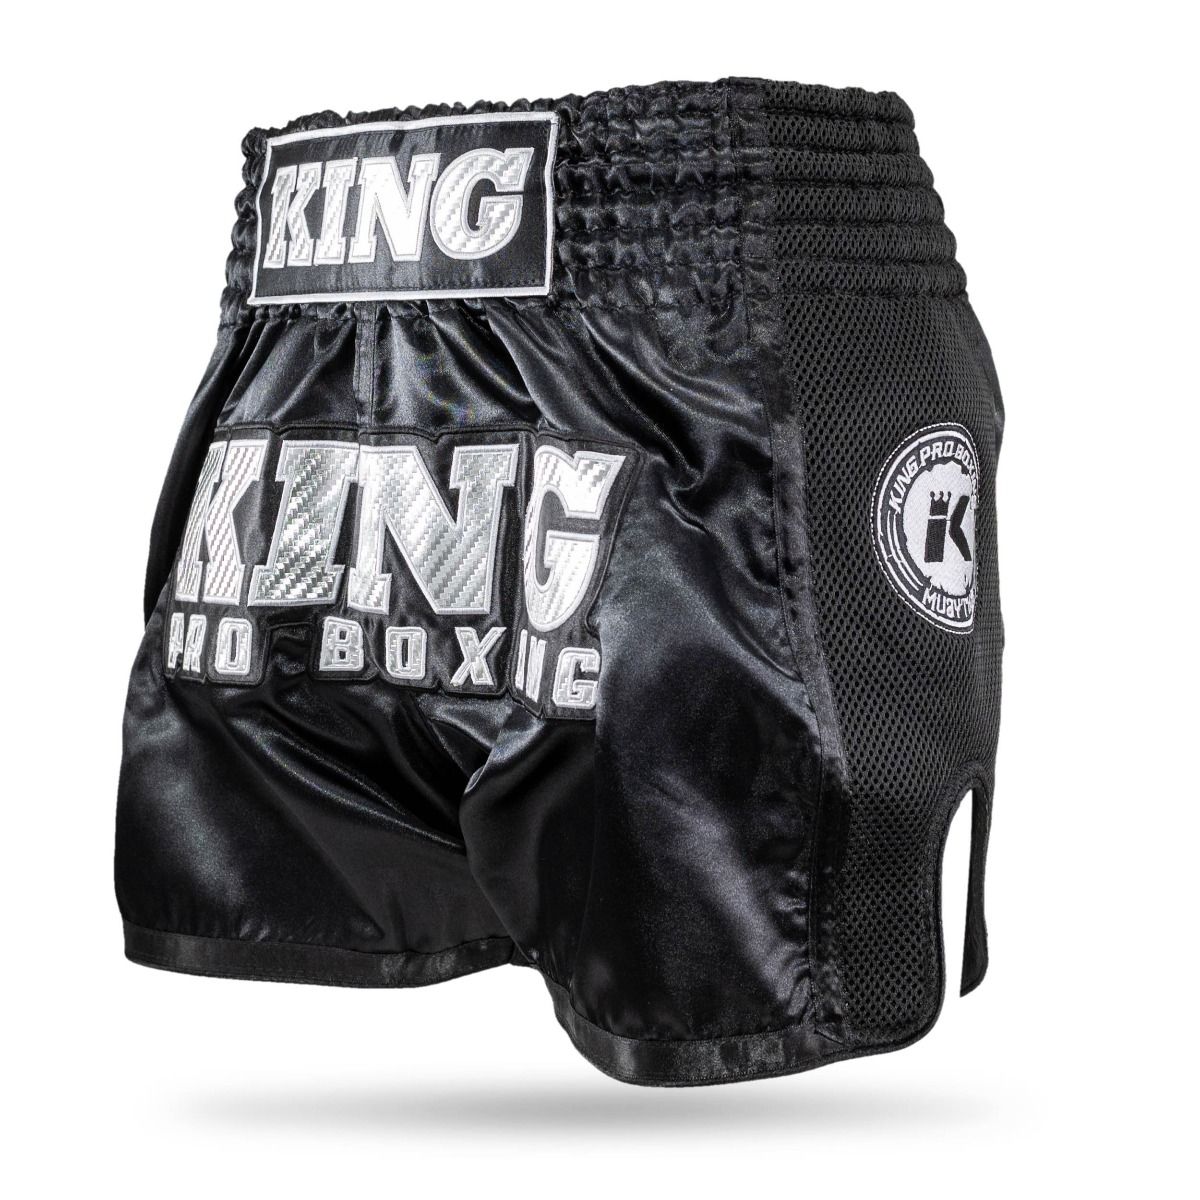 King Pro Boxing - fightshorts - BT X6 - zwart - zilver